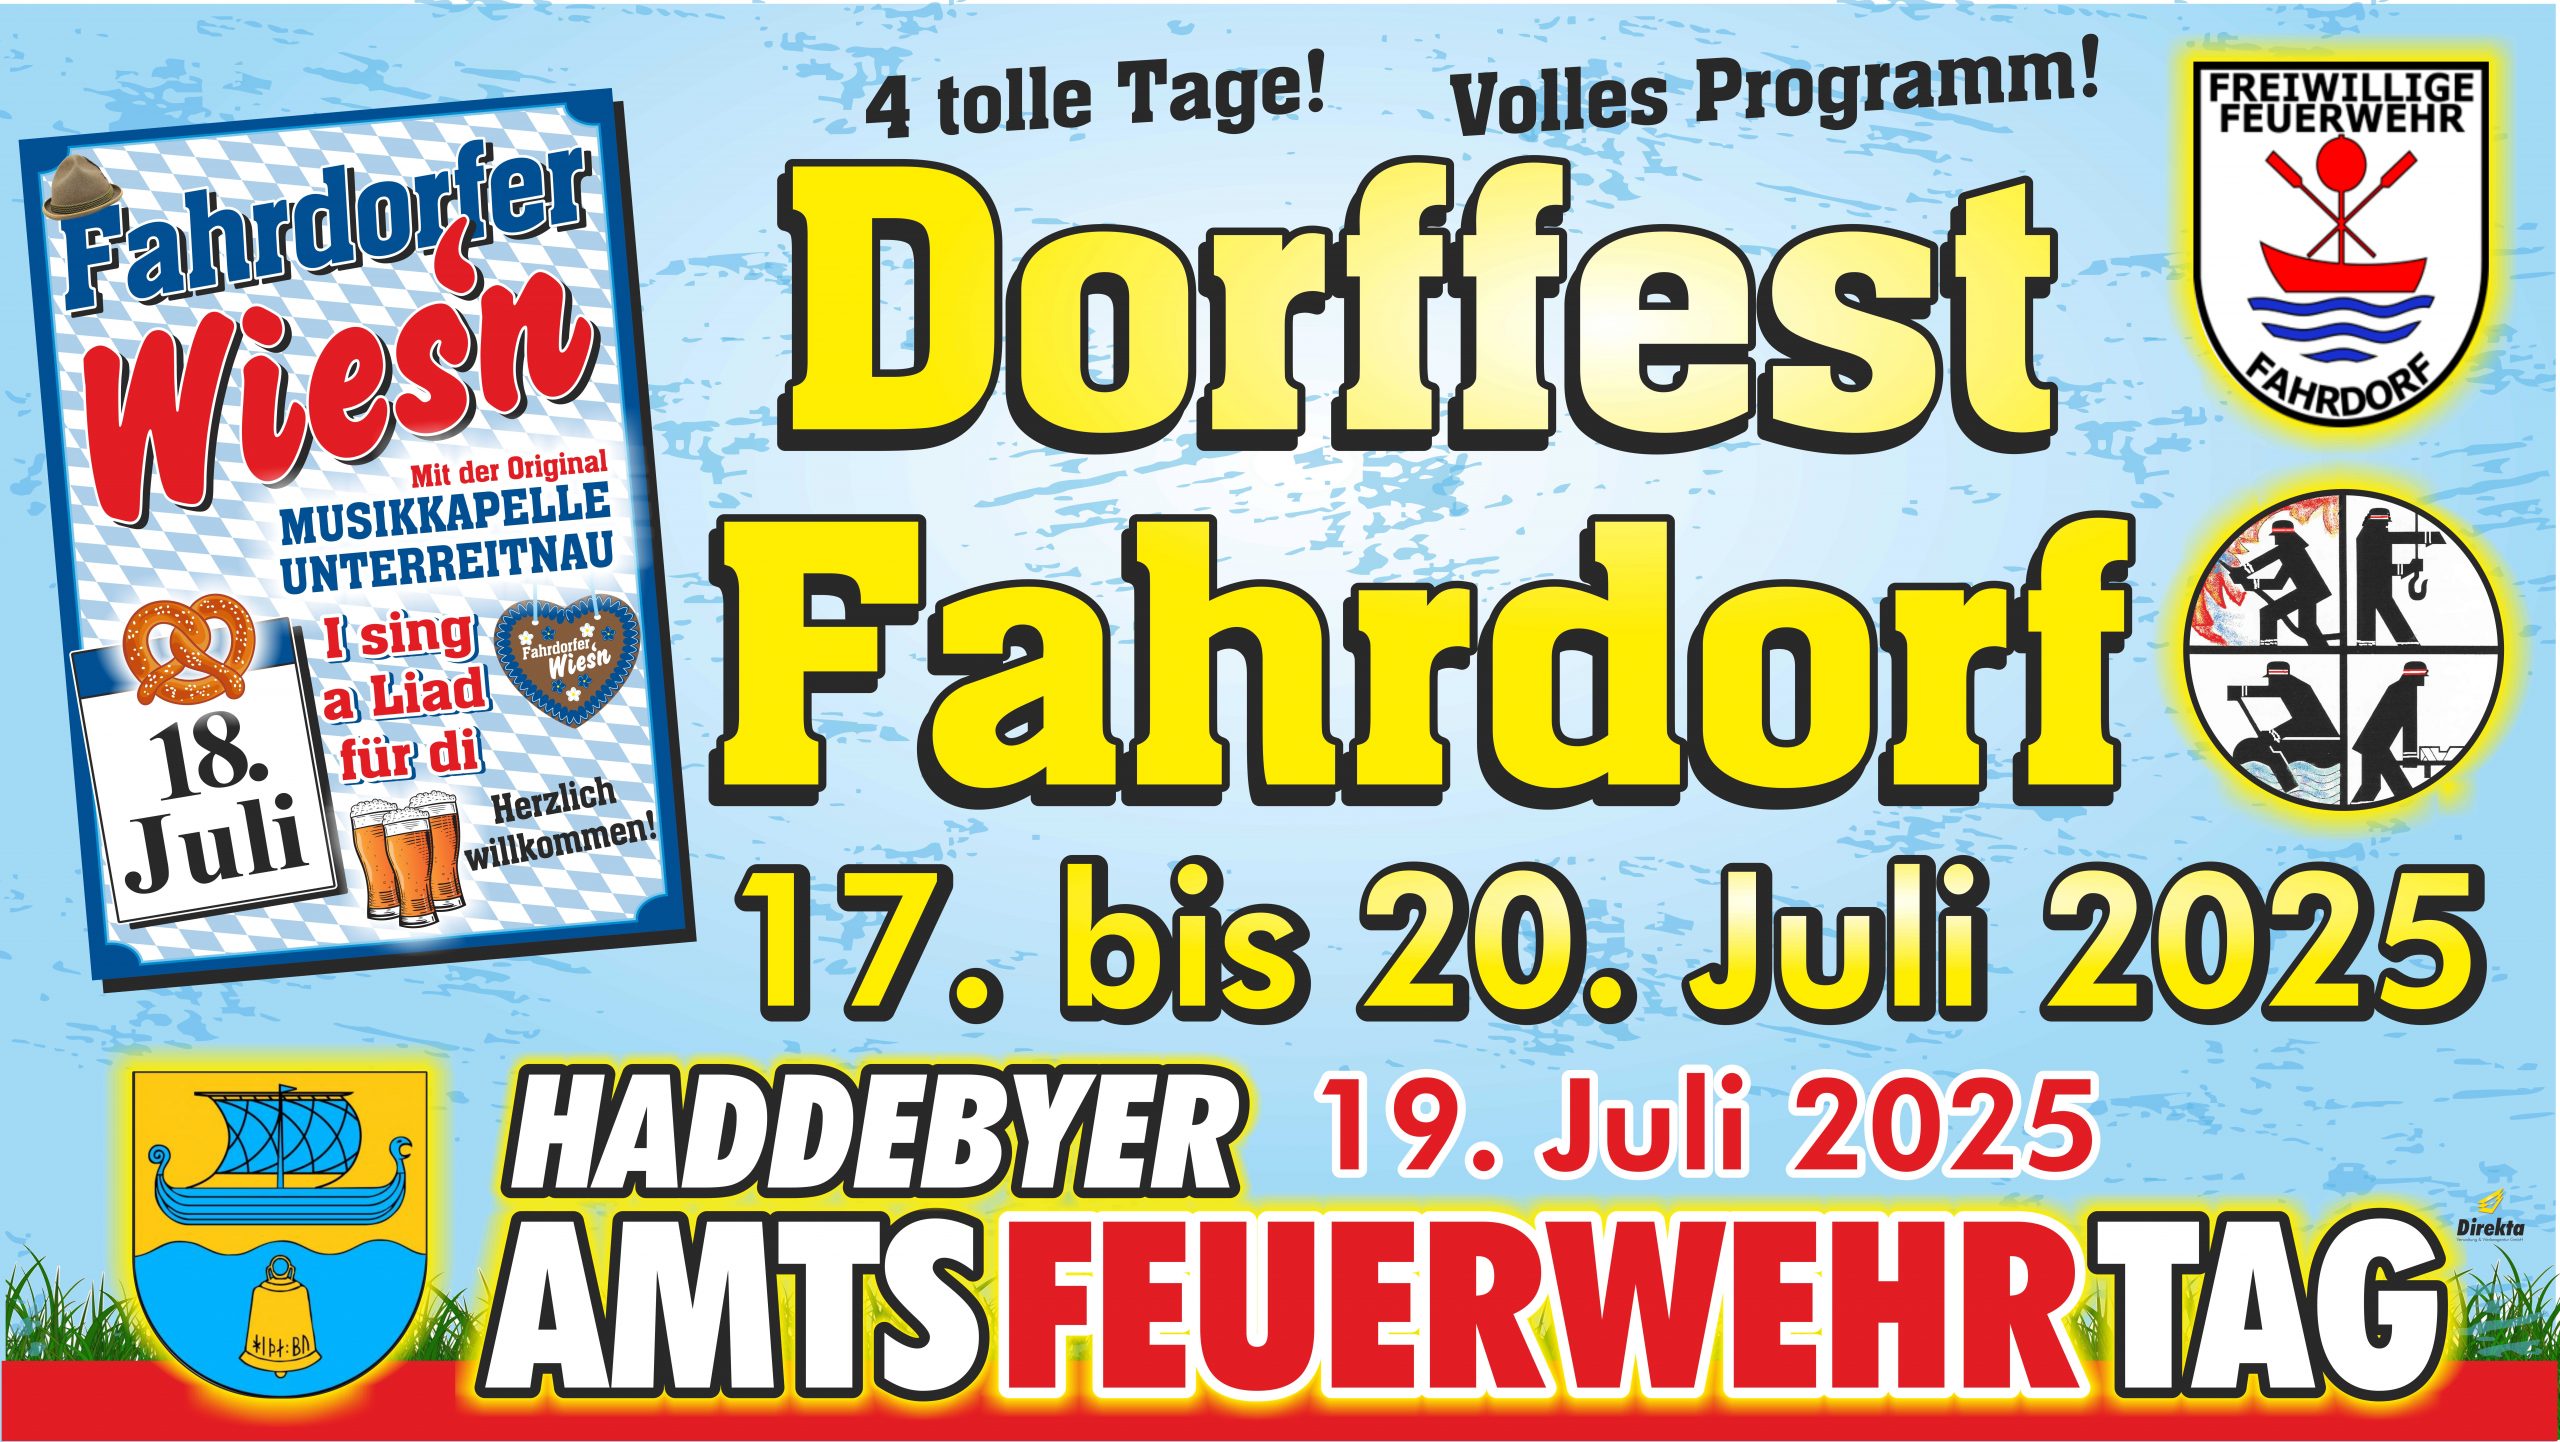 Dorffest Fahrdorf 2025!